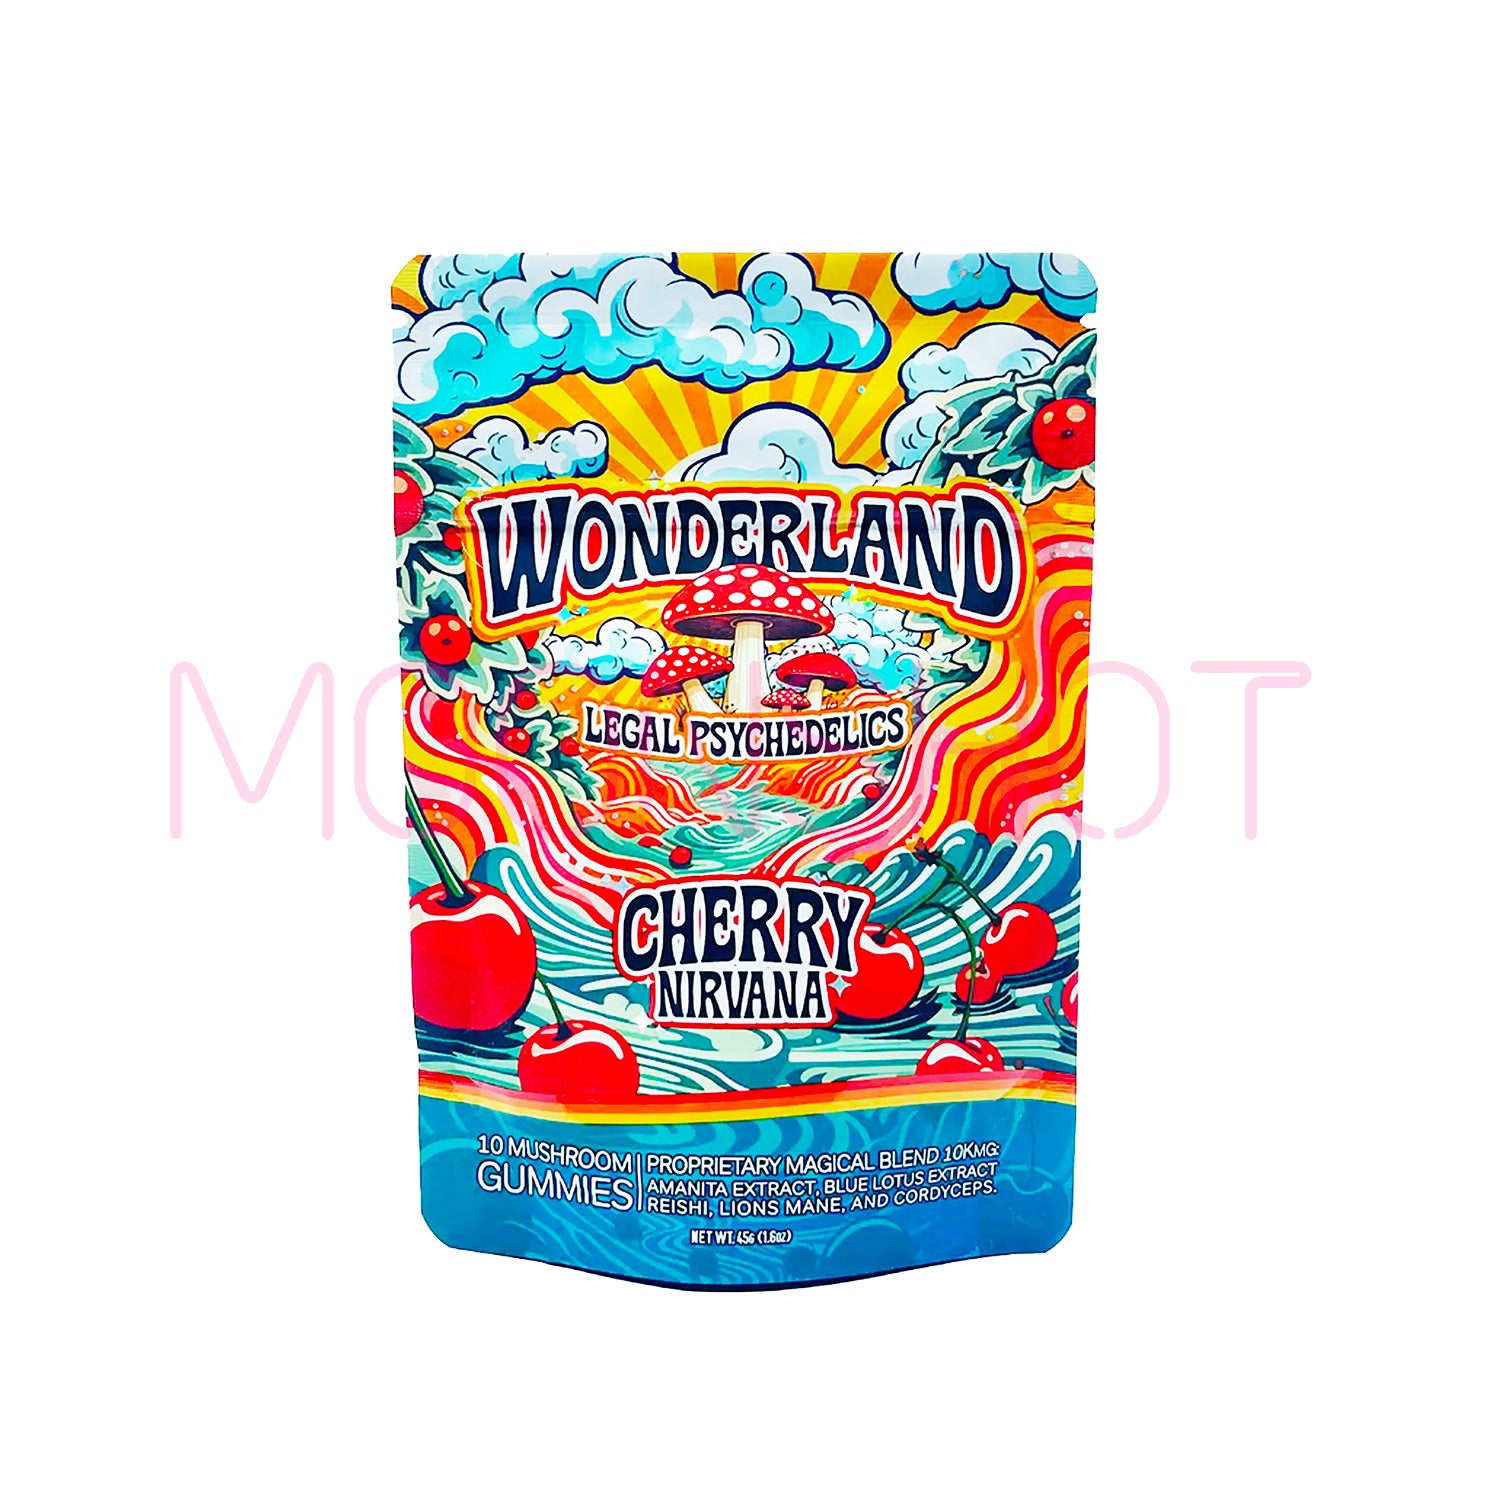 Wonderland Legal Psychedelic Mushroom Gummies Cherry Nirvana Bag